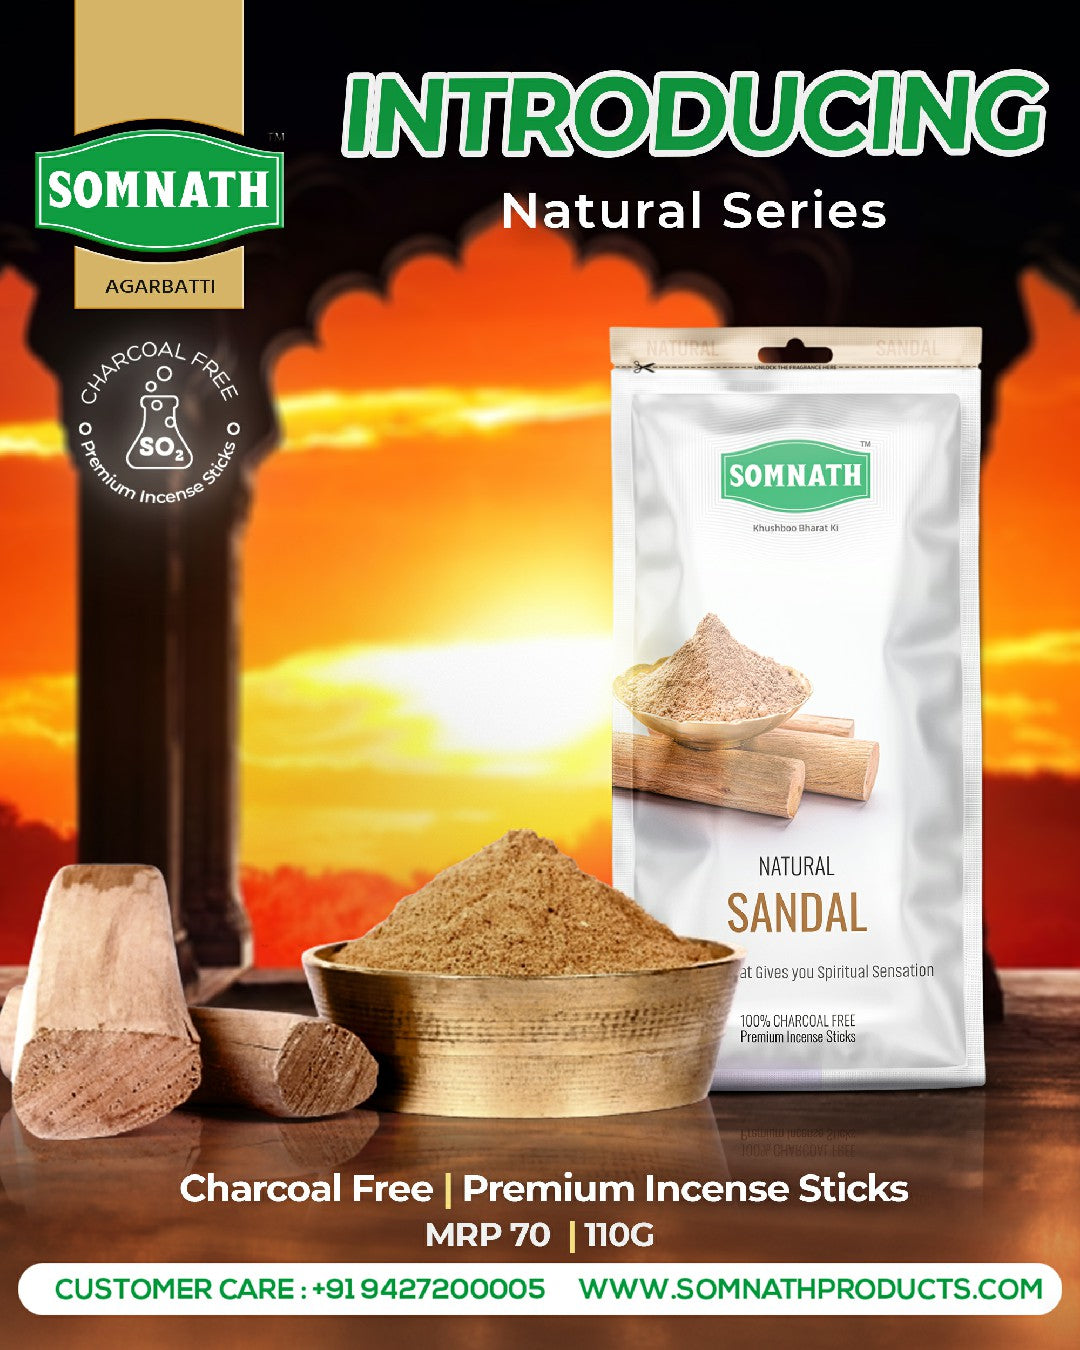 Natural Sandal Agarbatti | 100% Charcoal Free Incense Sticks.